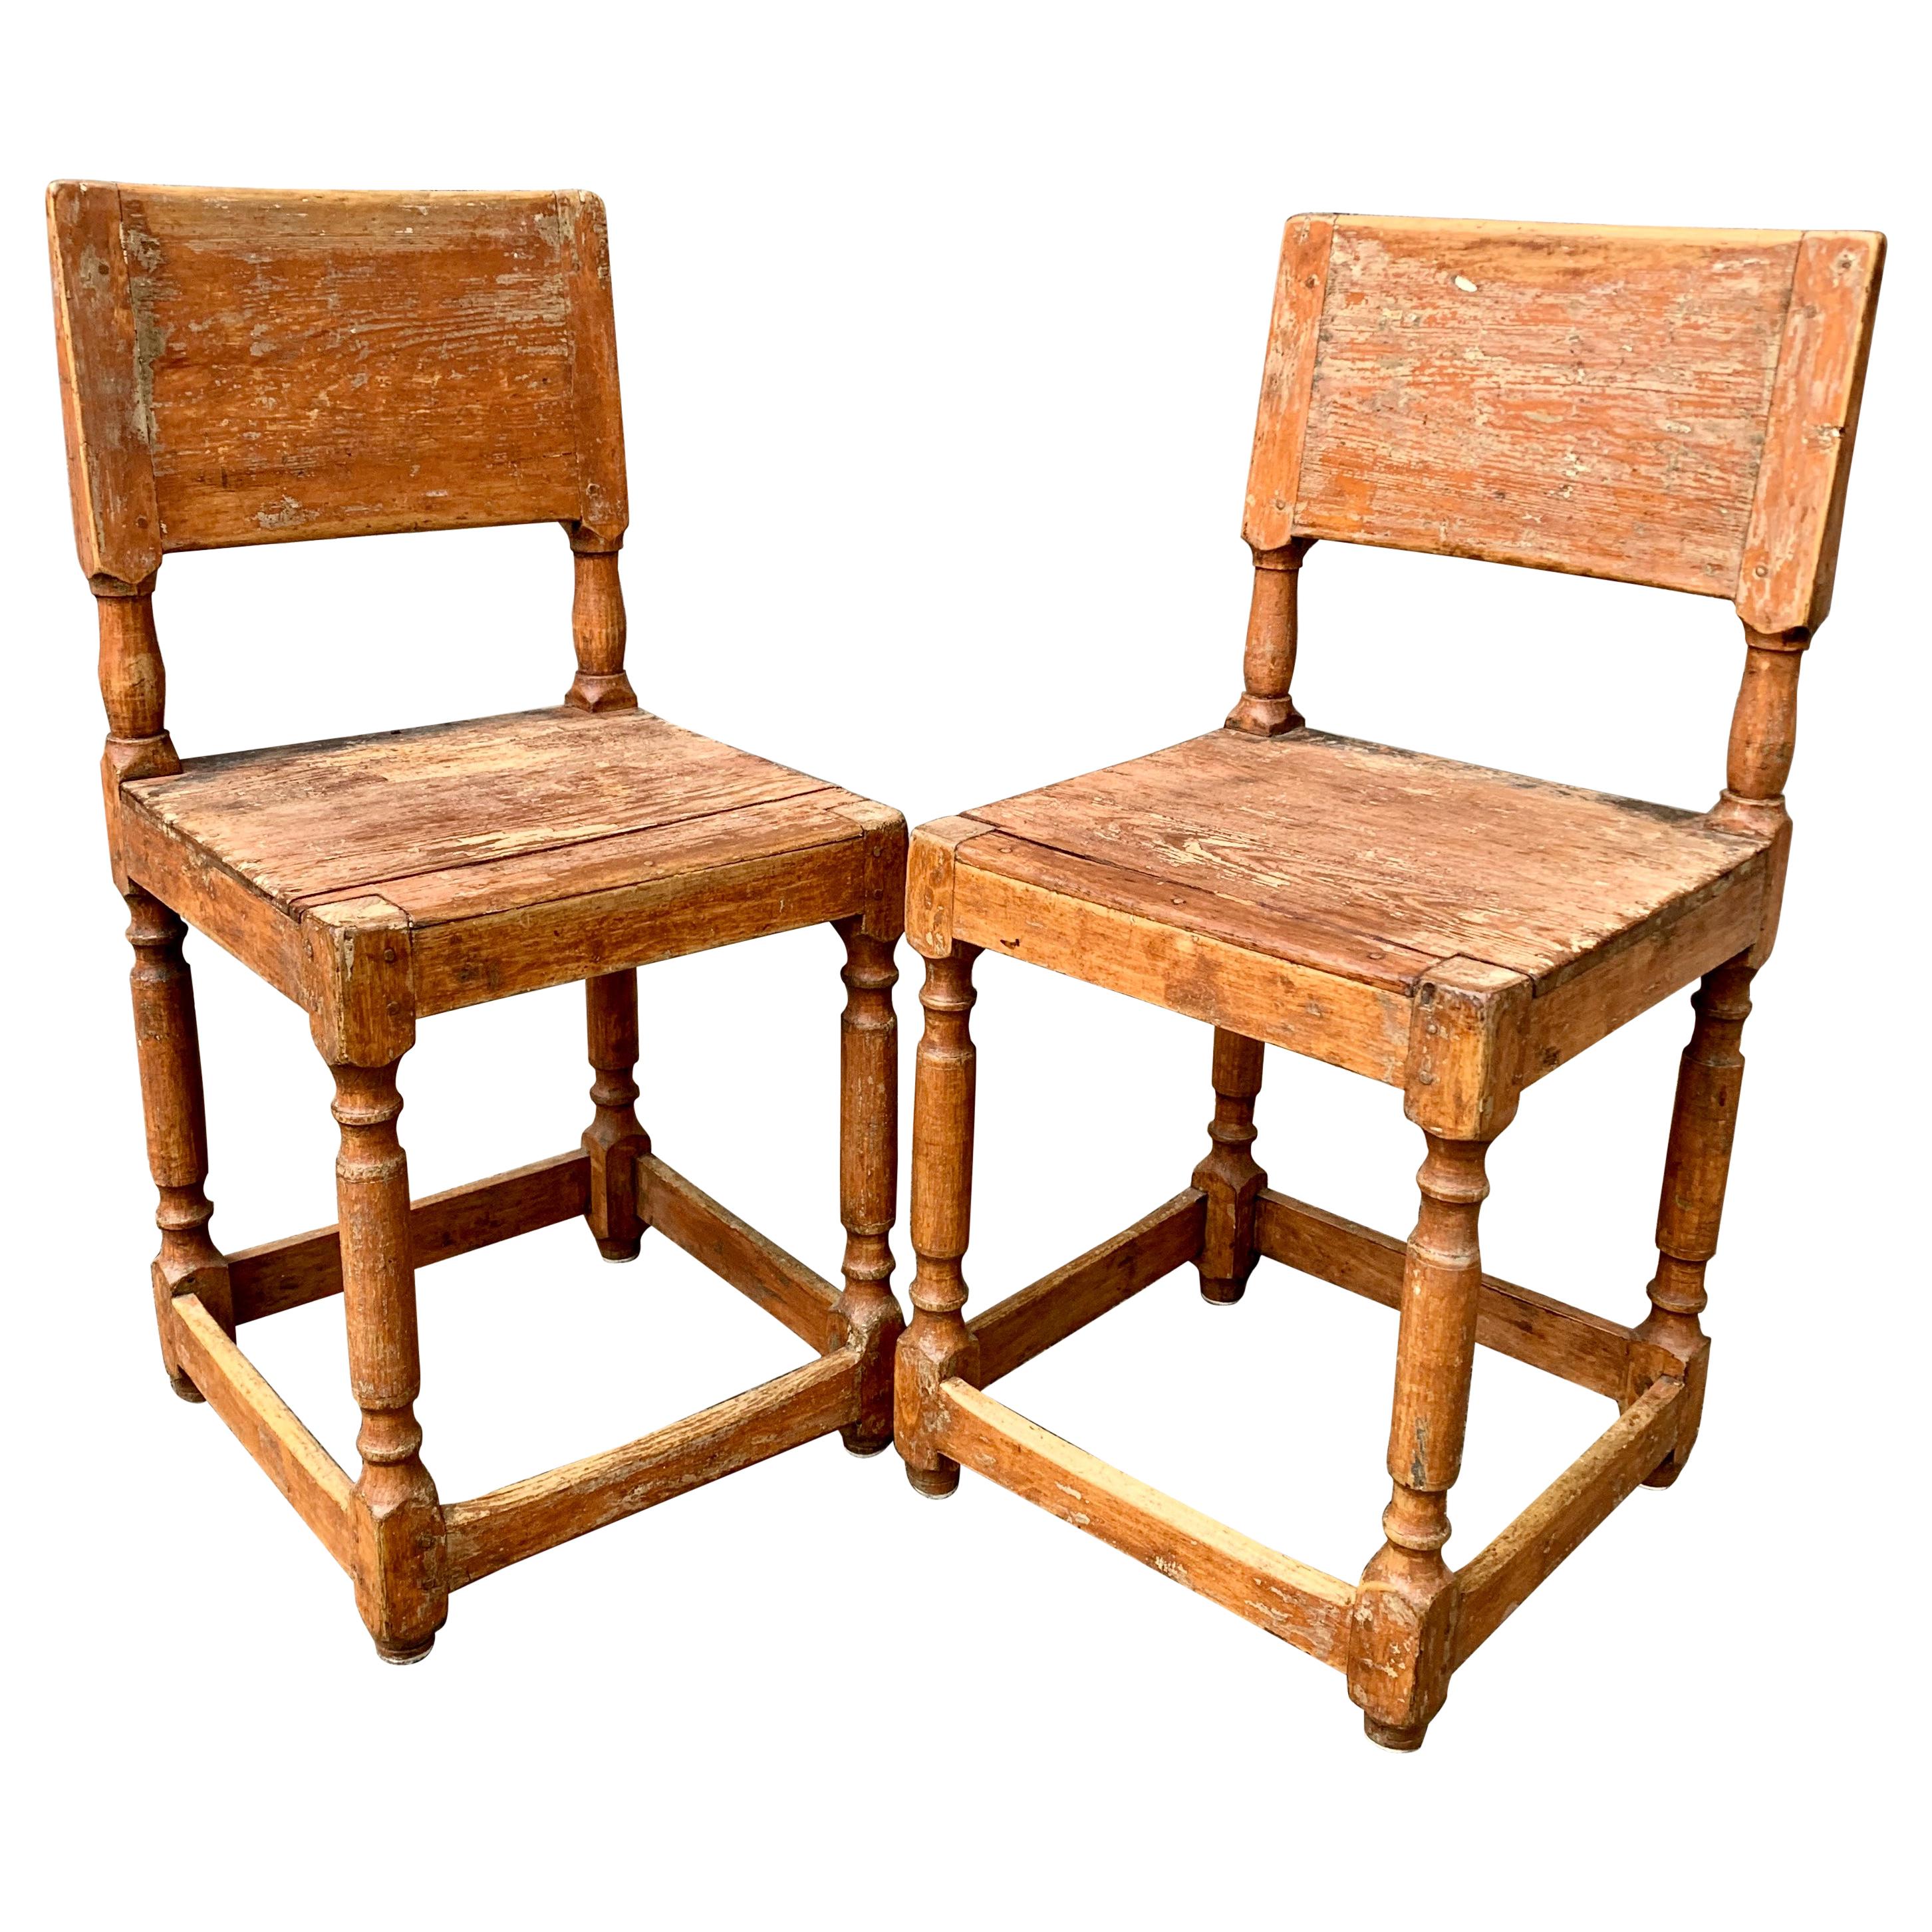 Early 19th Century Pair of Swedish Folk Art Chairs